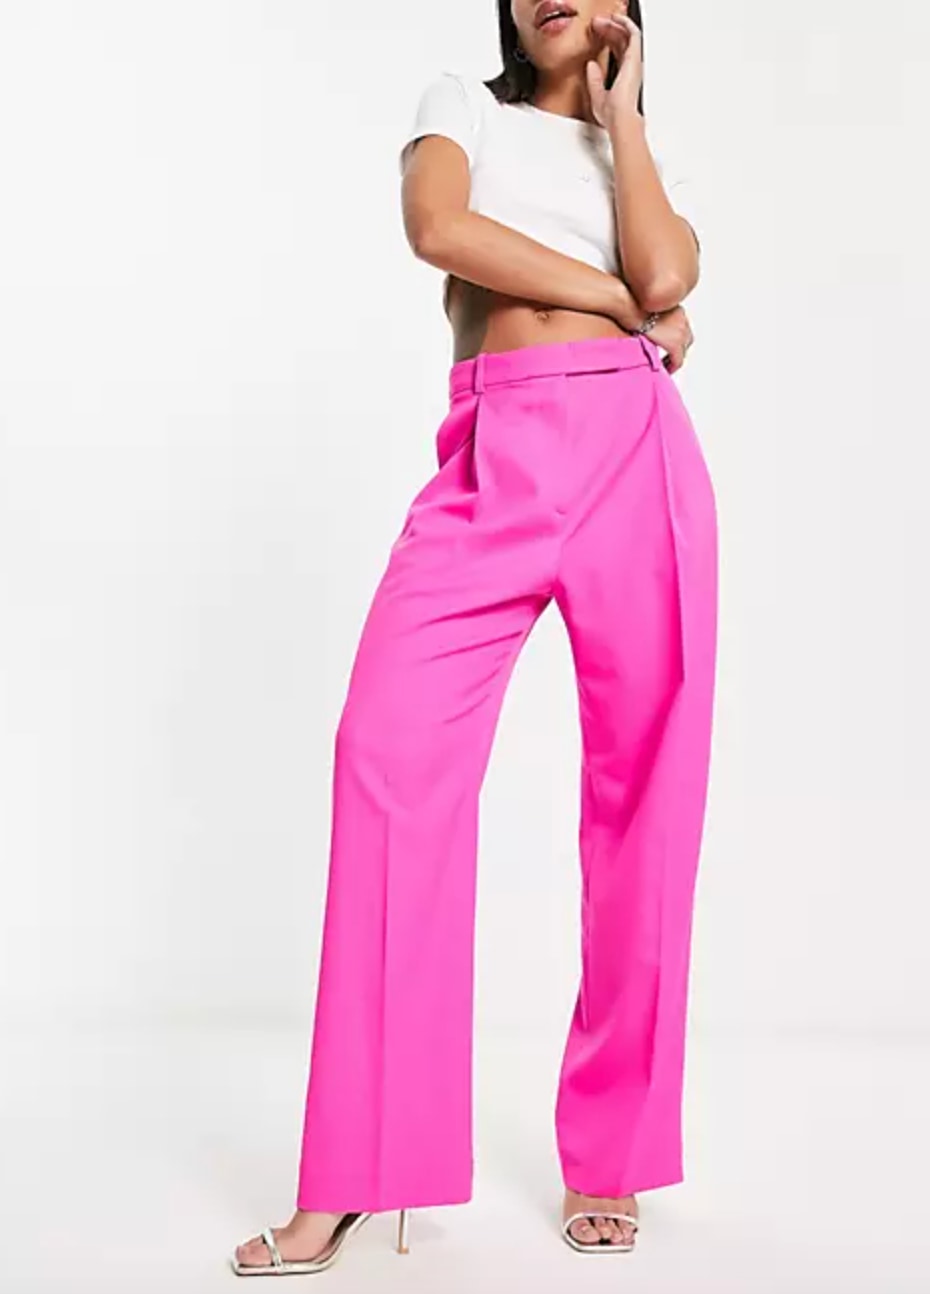 https://images.hellomagazine.com/horizon/original_aspect_ratio/1d725e08d6cd-hot-pink-trousers.png